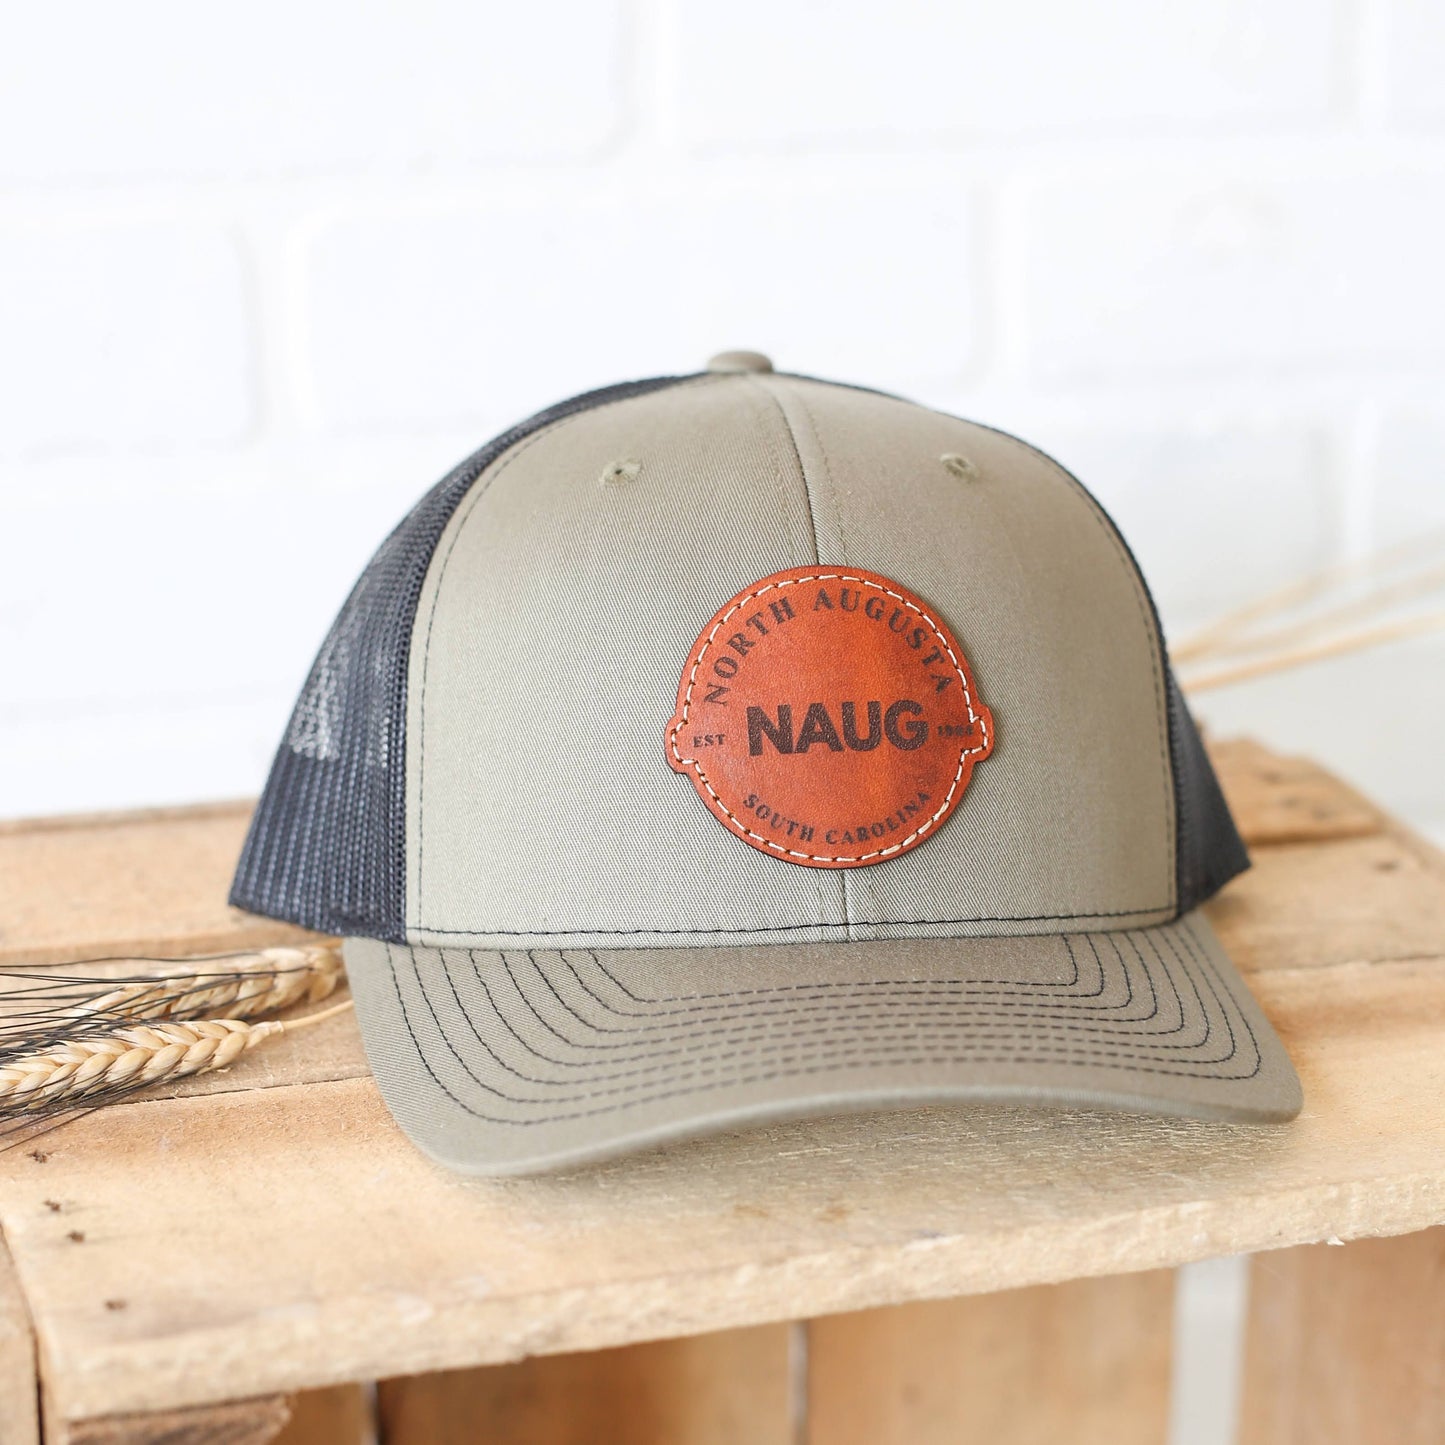 NAUG North Augusta South Carolina Leather Patch Hat